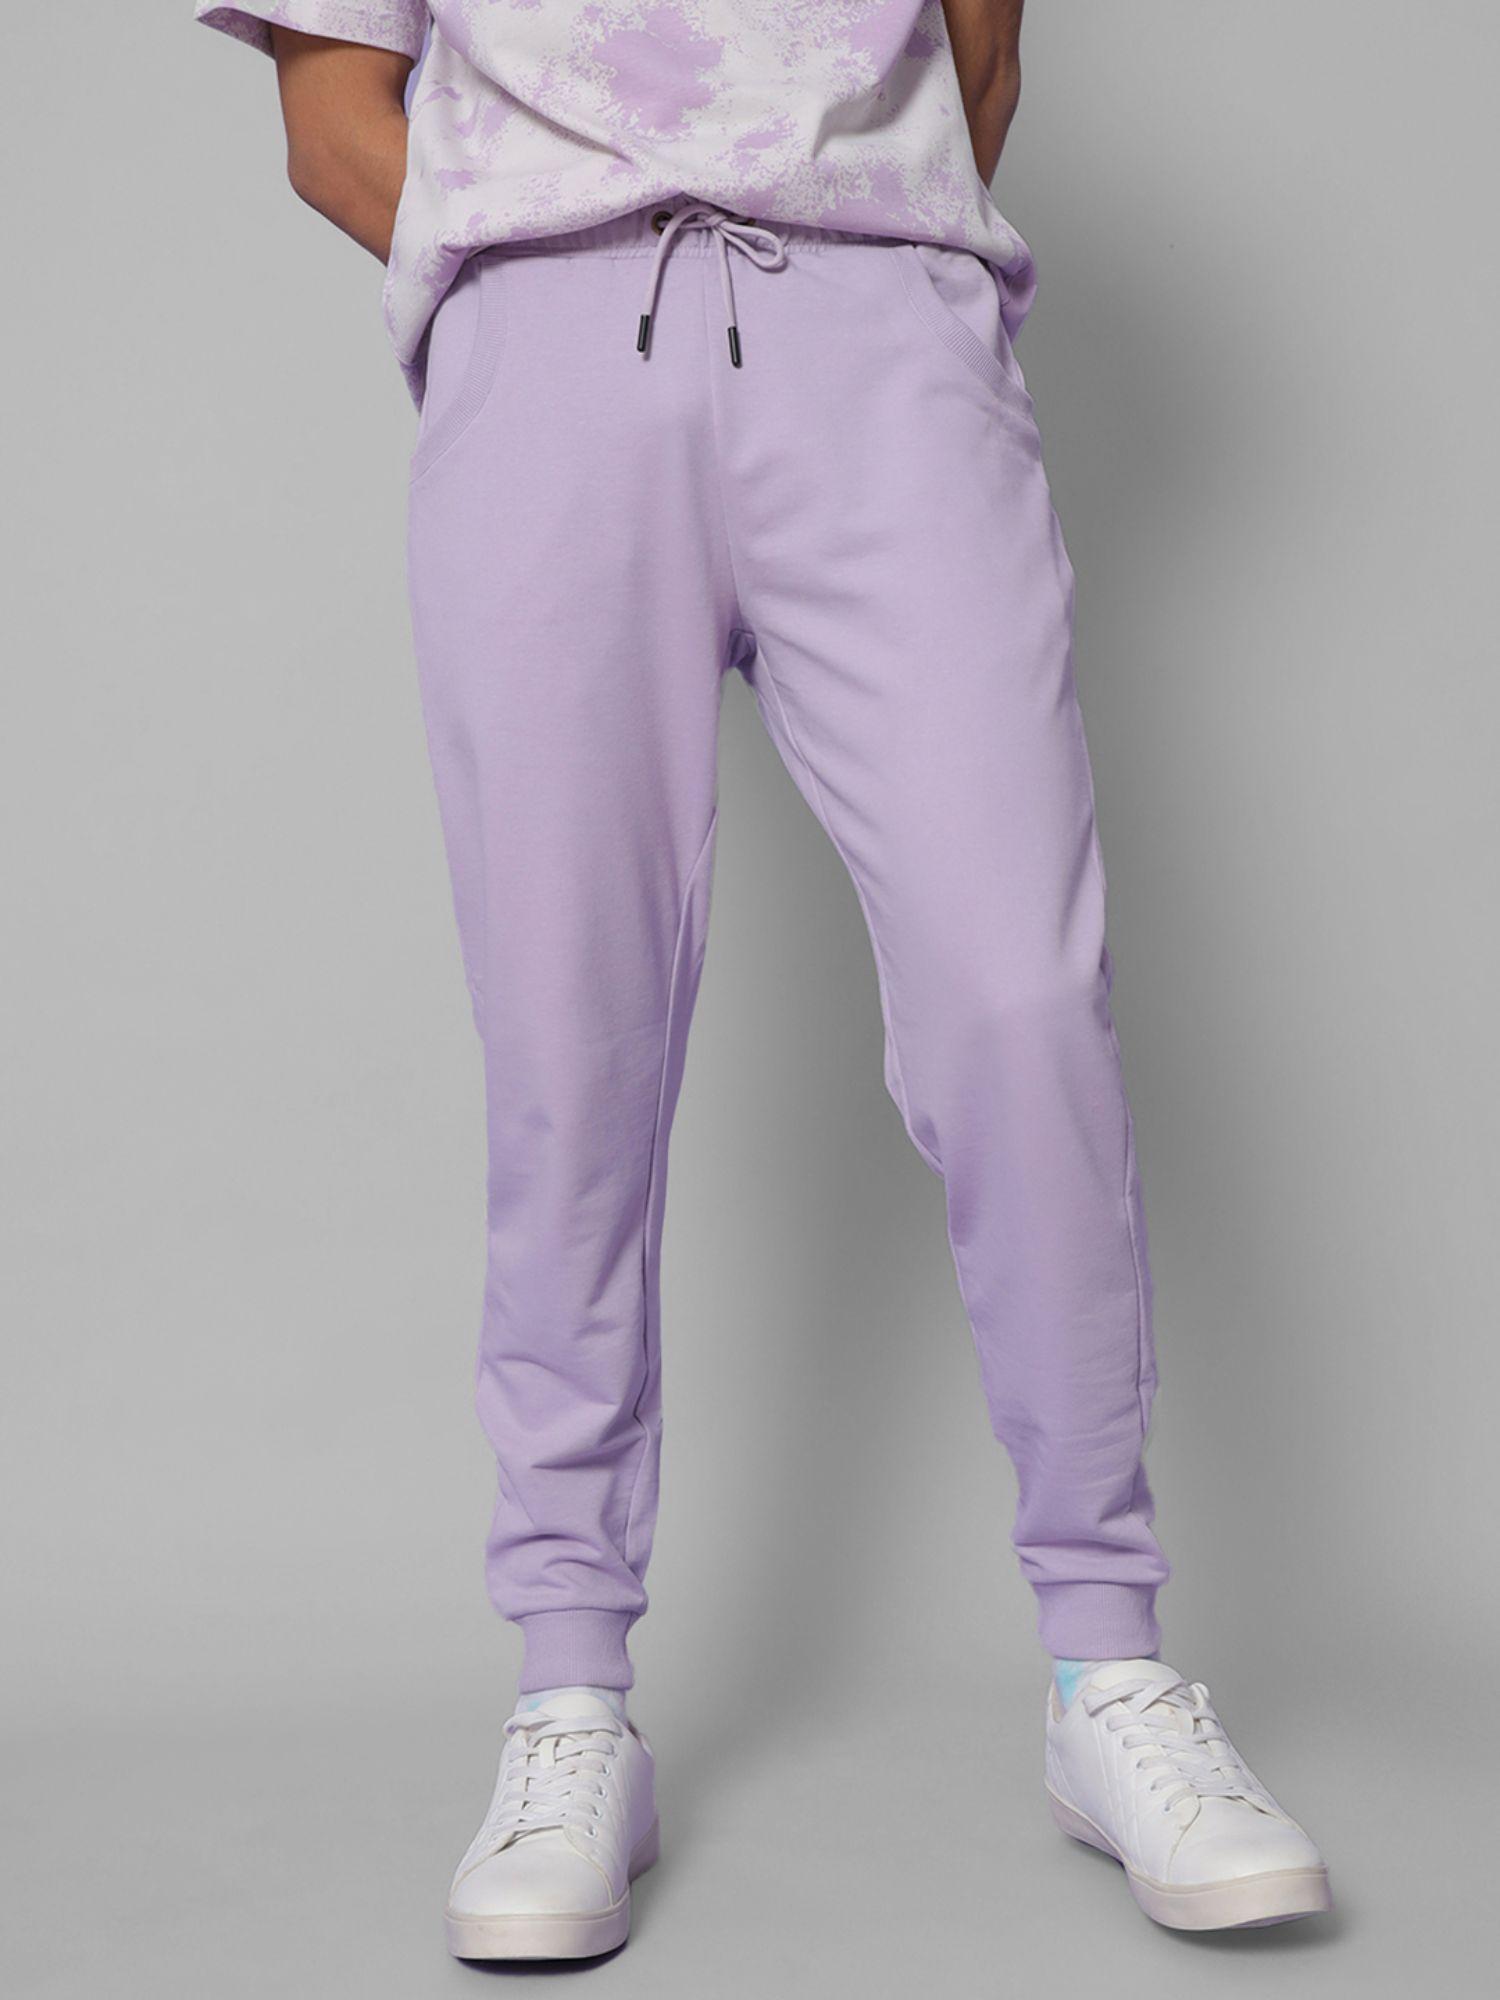 mens purple feel good joggers